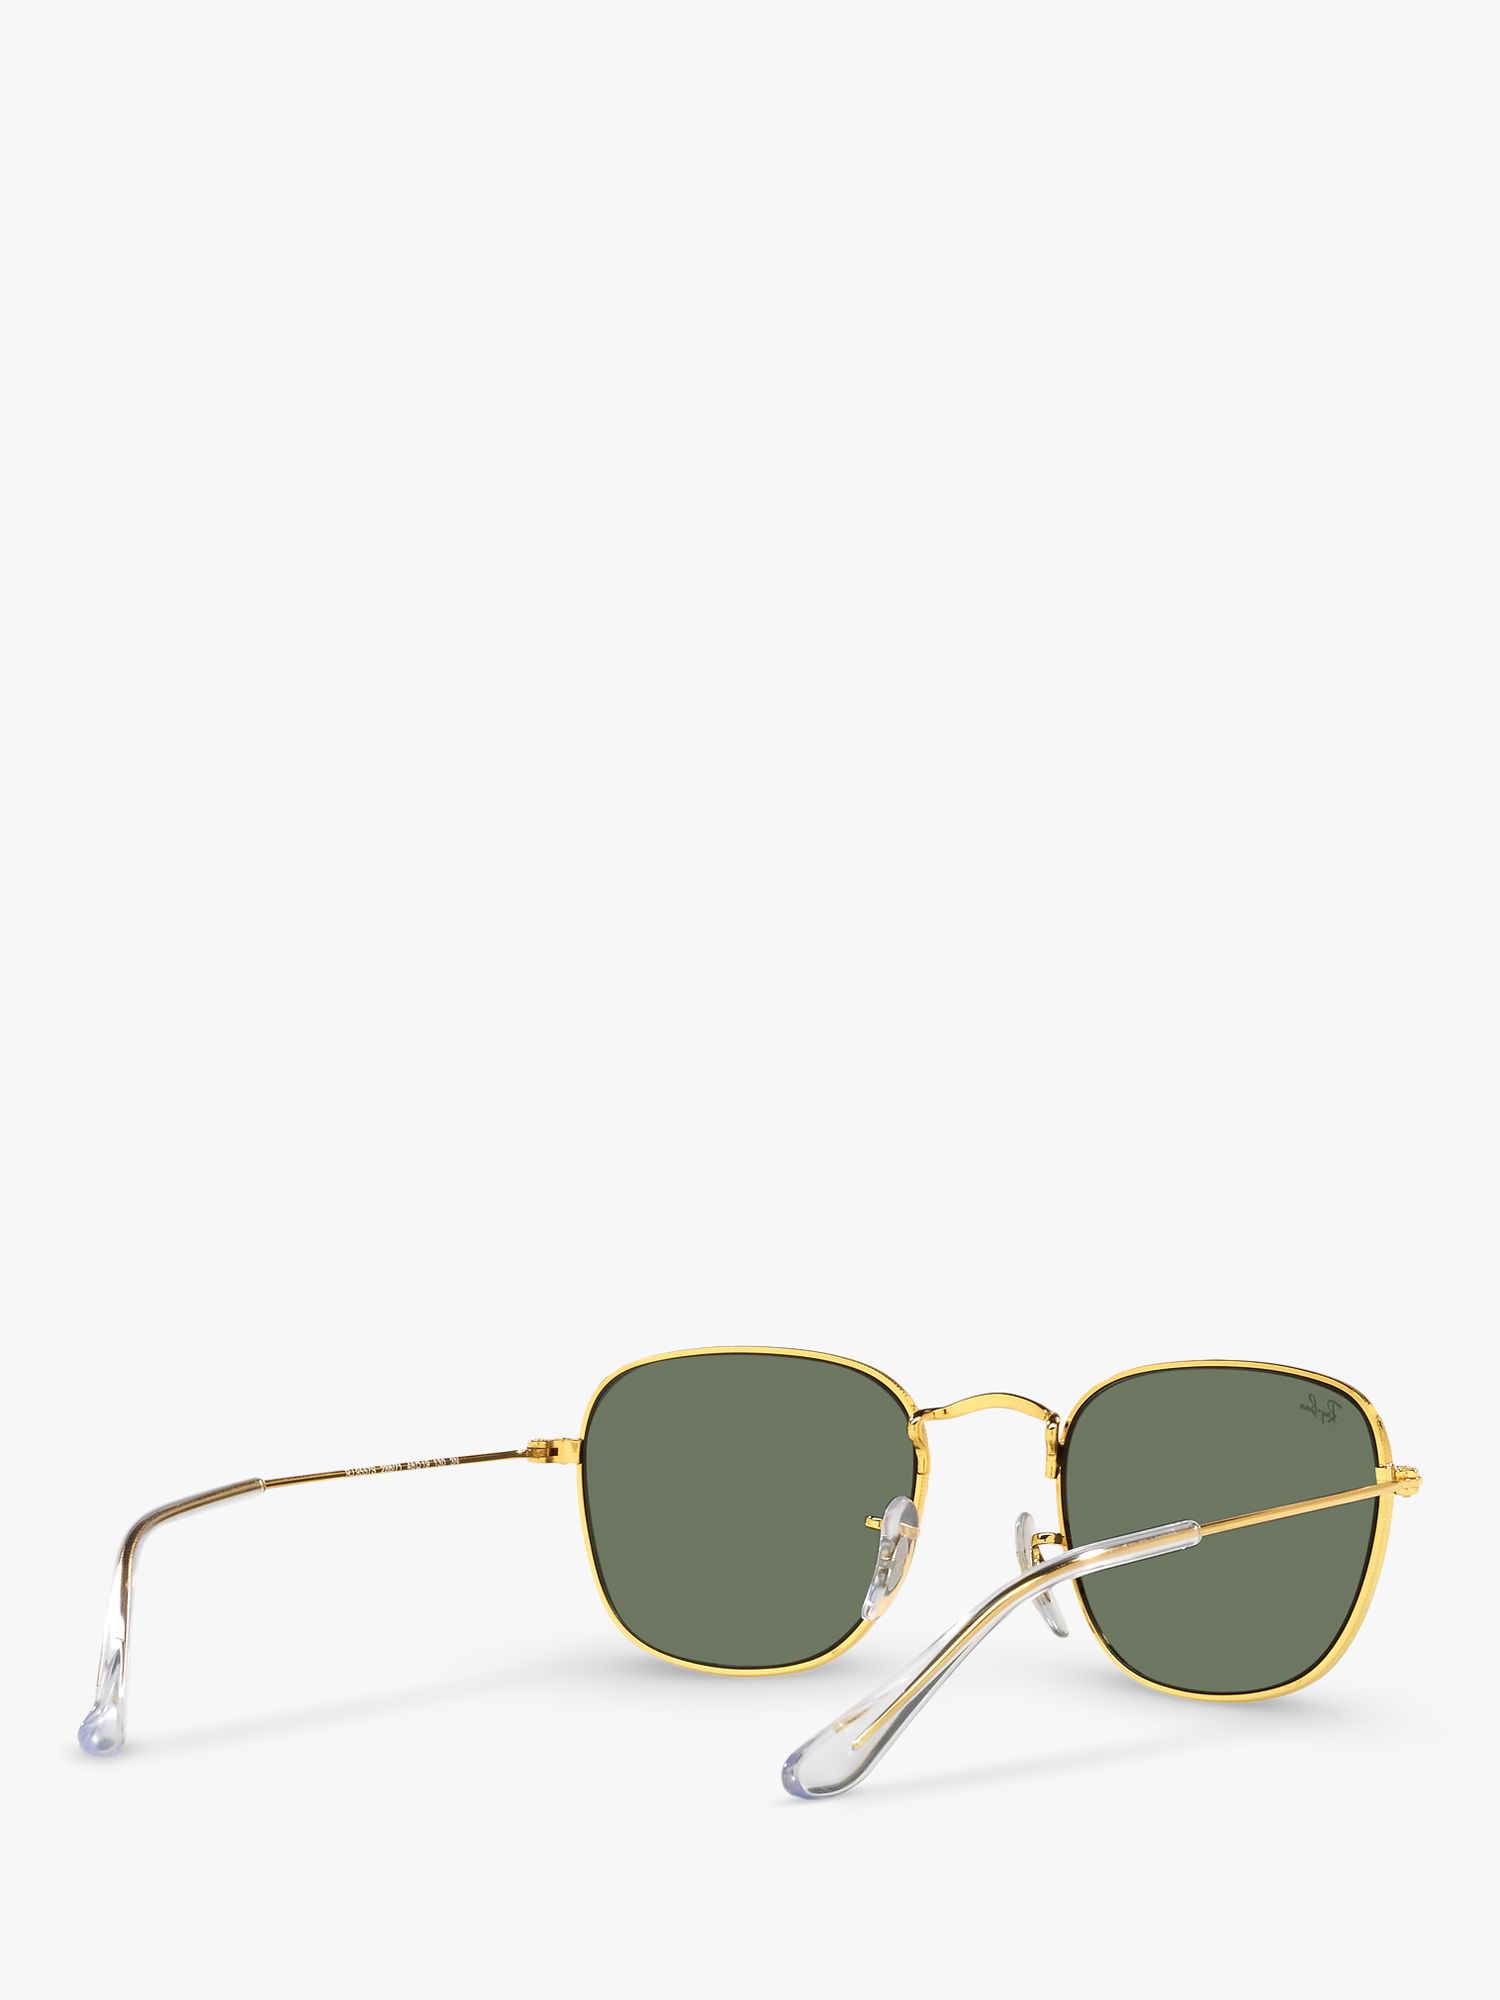 Buy Ray-Ban Junior RJ9557S Square Sunglasses, Legend Gold/Green Online at johnlewis.com